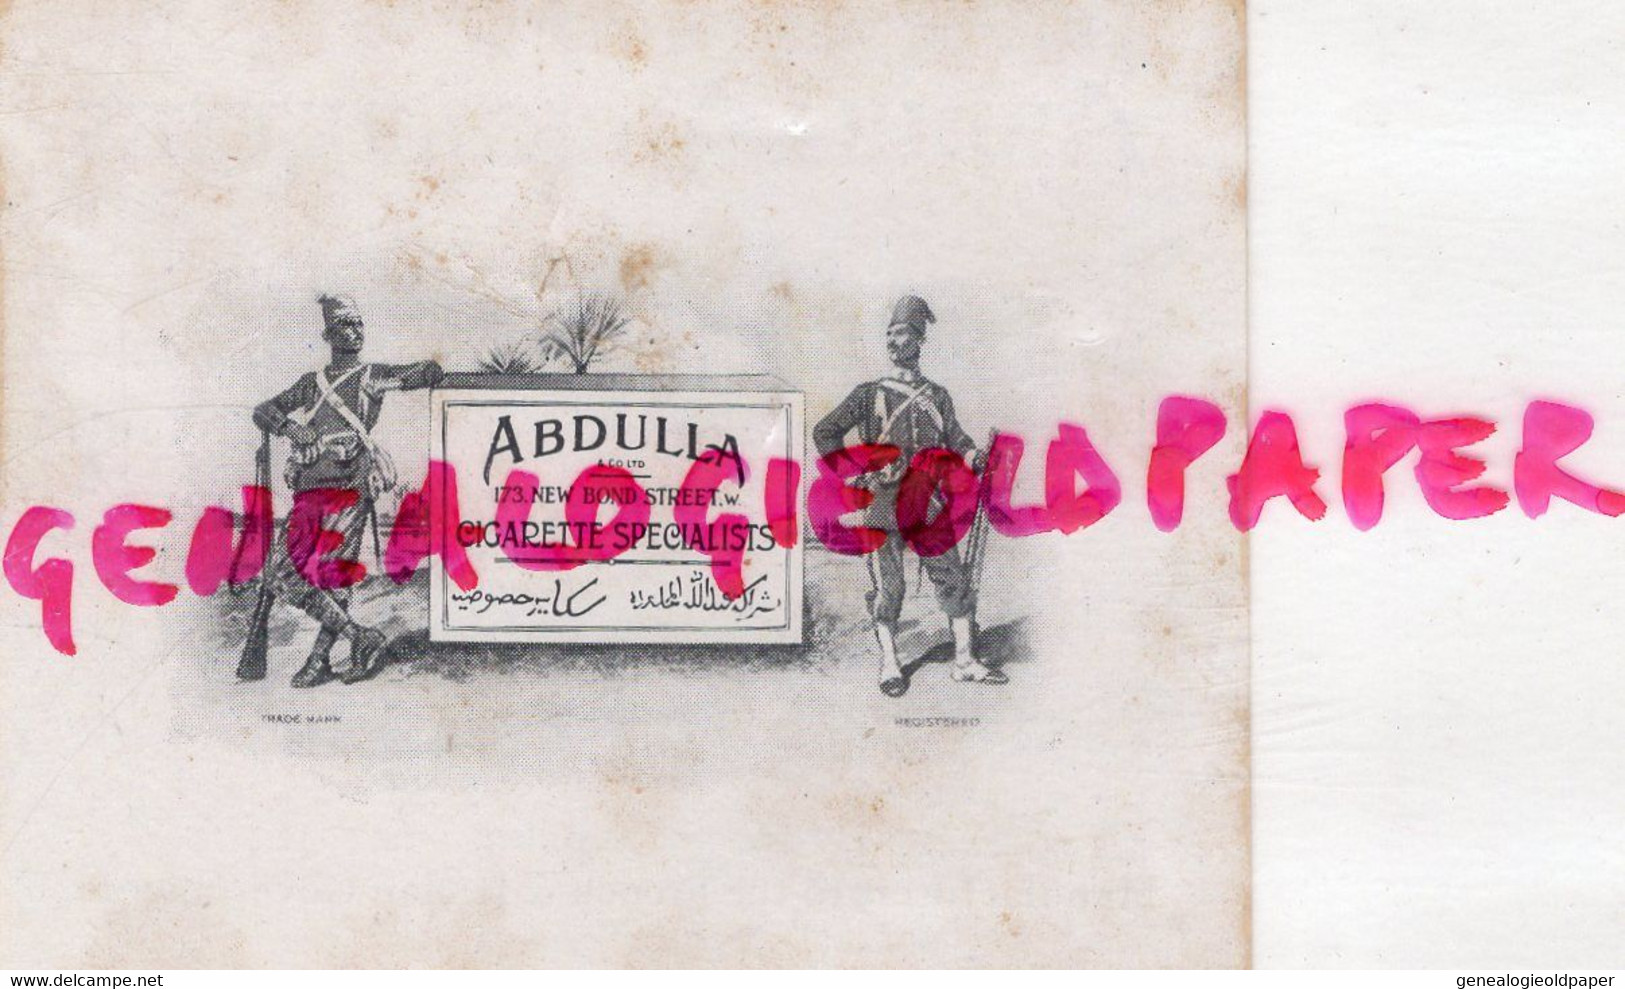 ANGLETERRE- CARTE ABDULLA CIGARETTE -173 NEW BOND STREET TIRAILLEUR AFRIQUE- ZIGARETTEN- TABAC- - Documents